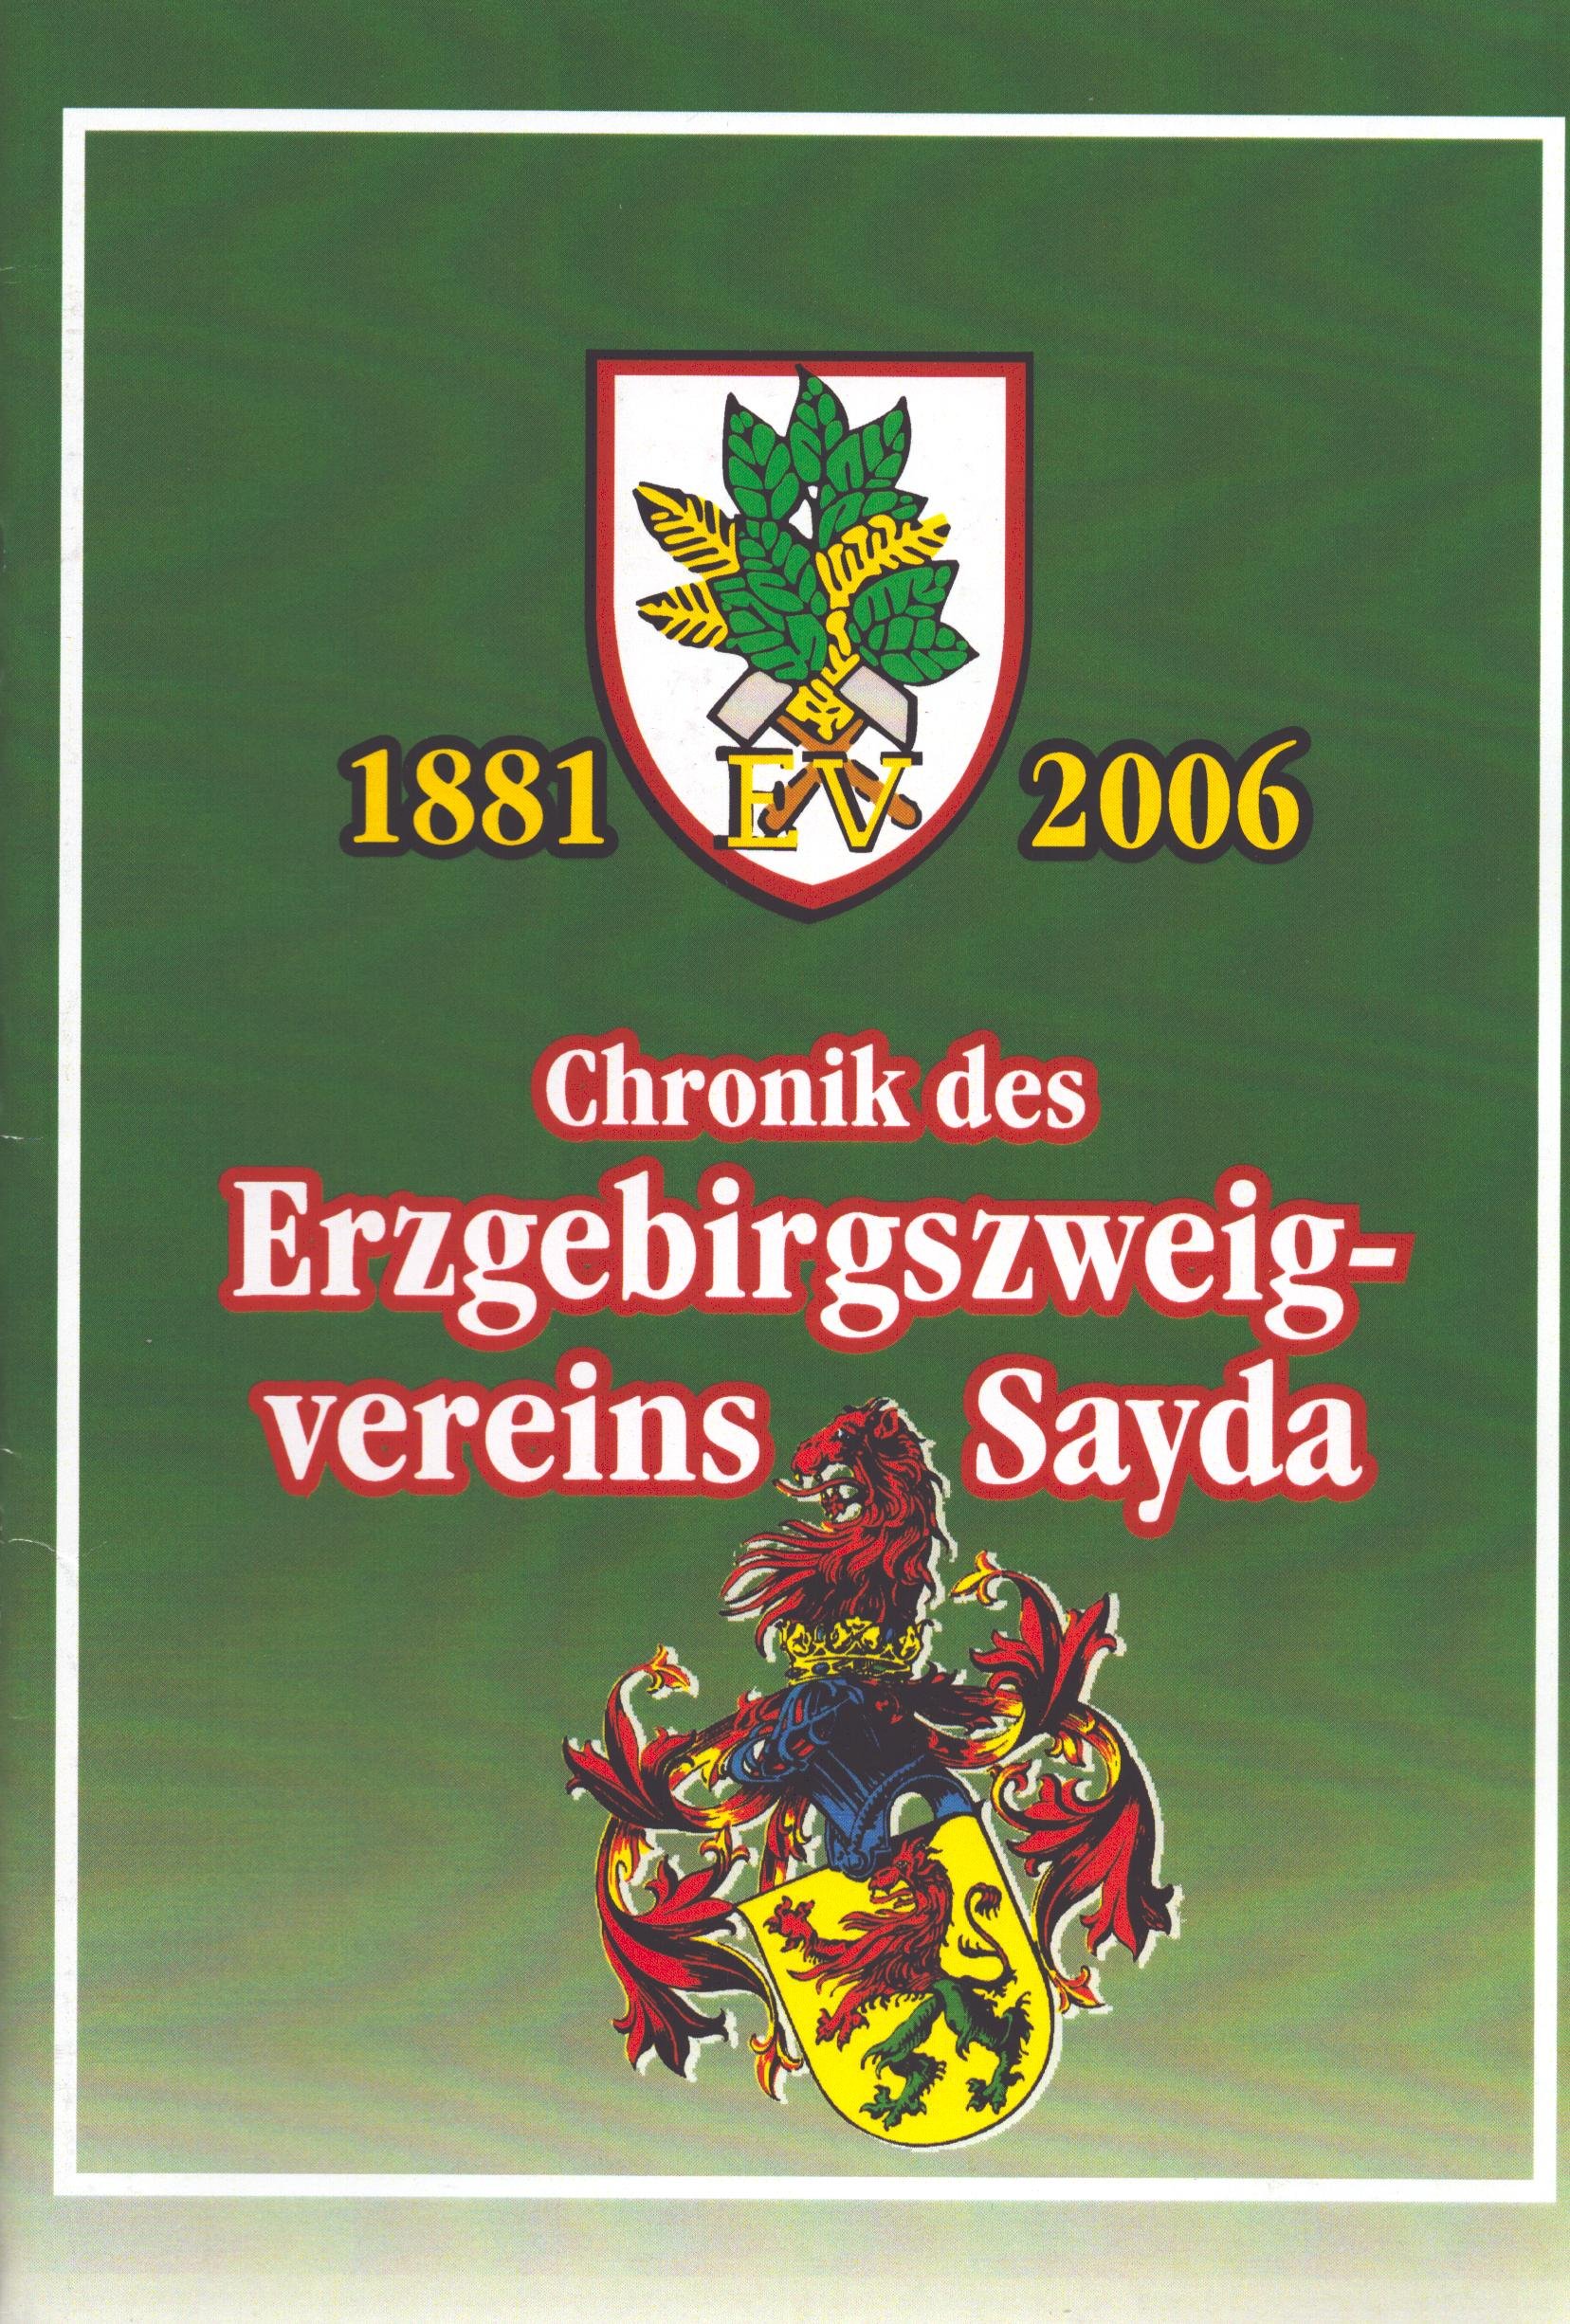 Chronik des Erzgebirgsvereins Sayda (Archiv SAXONIA-FREIBERG-STIFTUNG CC BY-NC-SA)